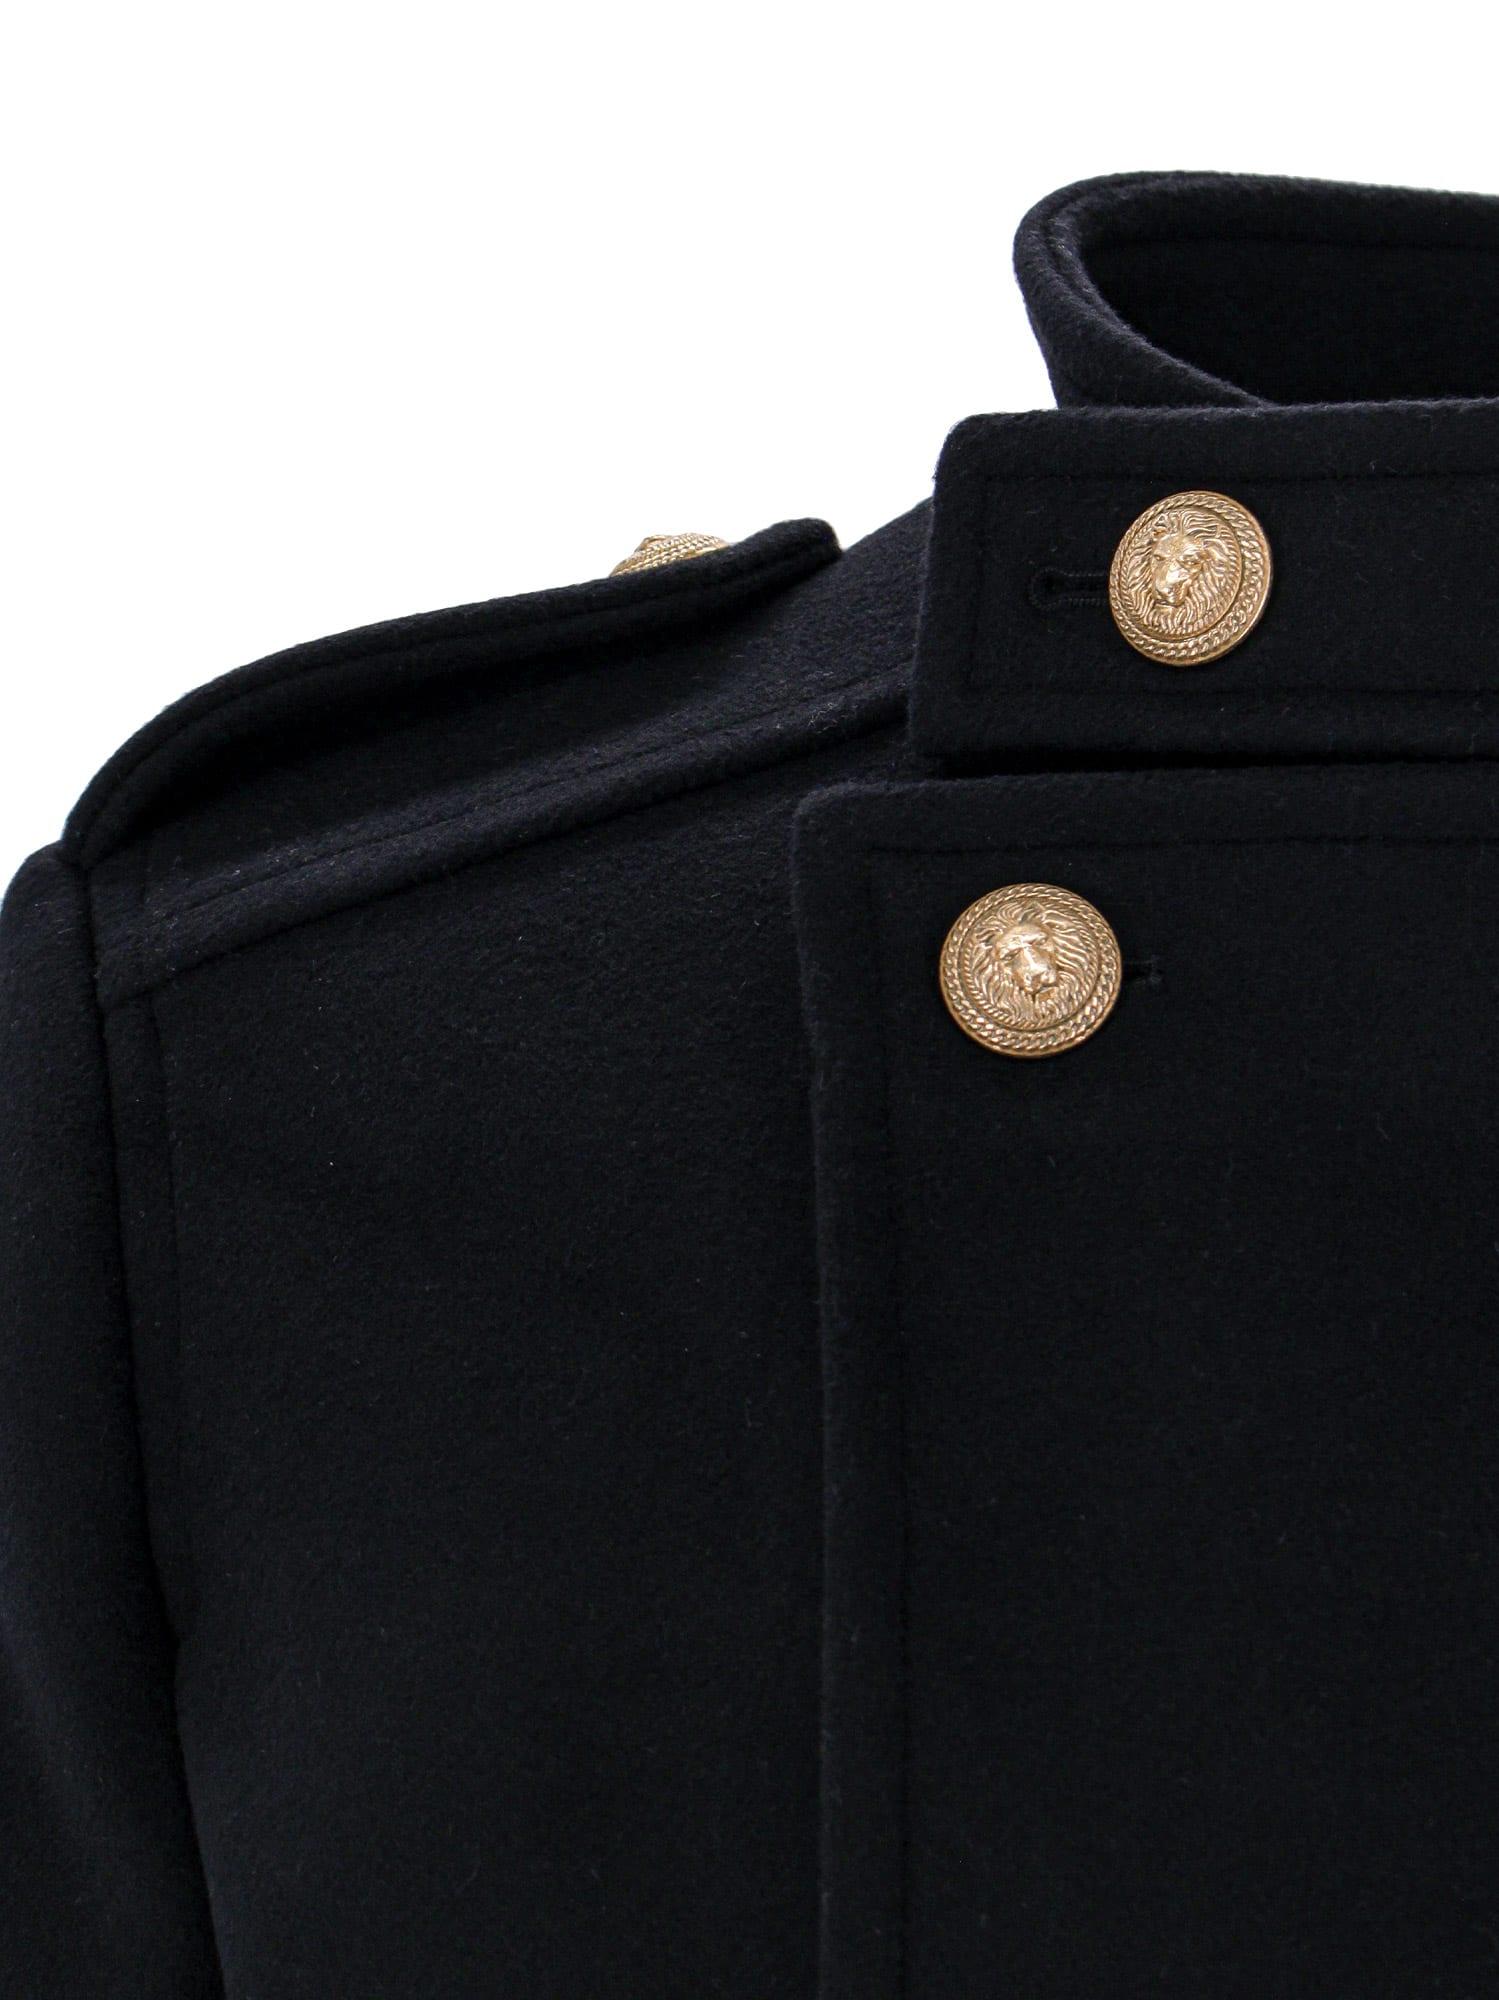 Balmain Coat in Black for Men | Lyst